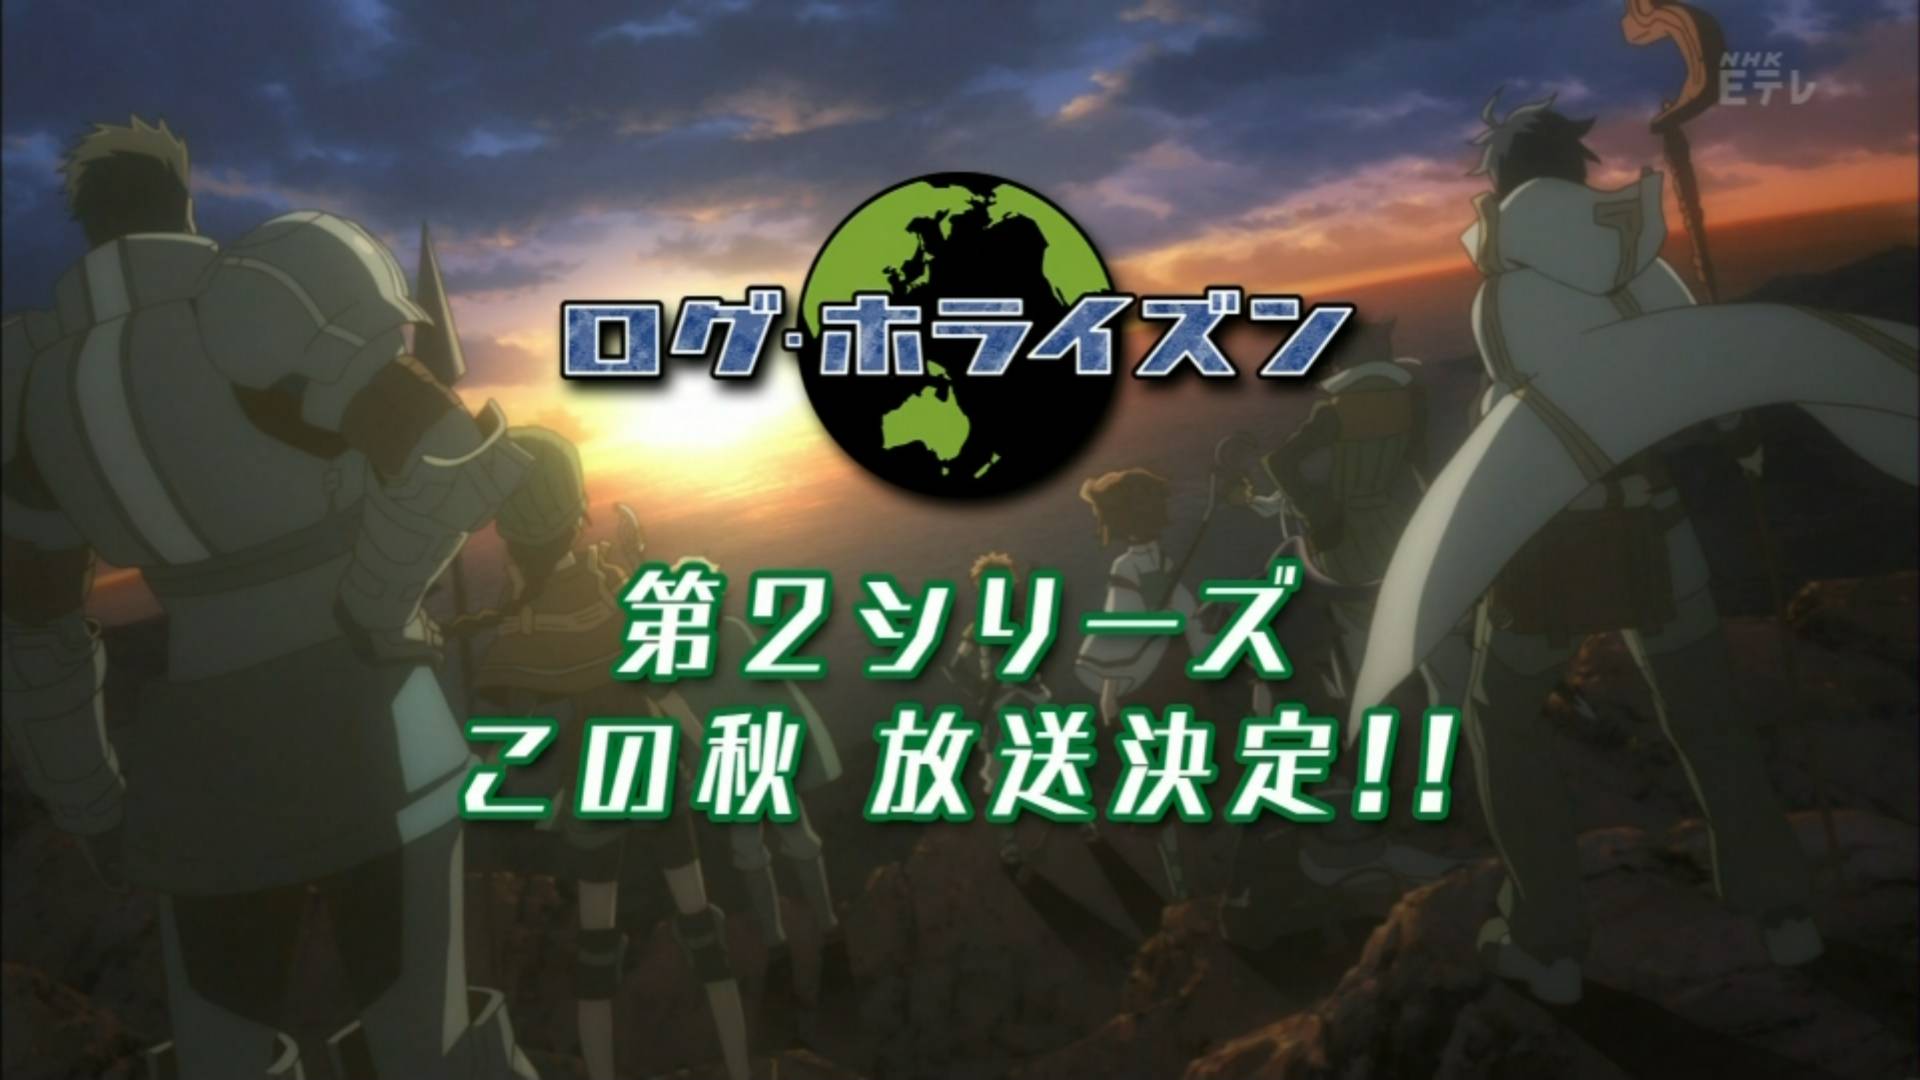 Log Horizon Sequel Anime Airs This October Image